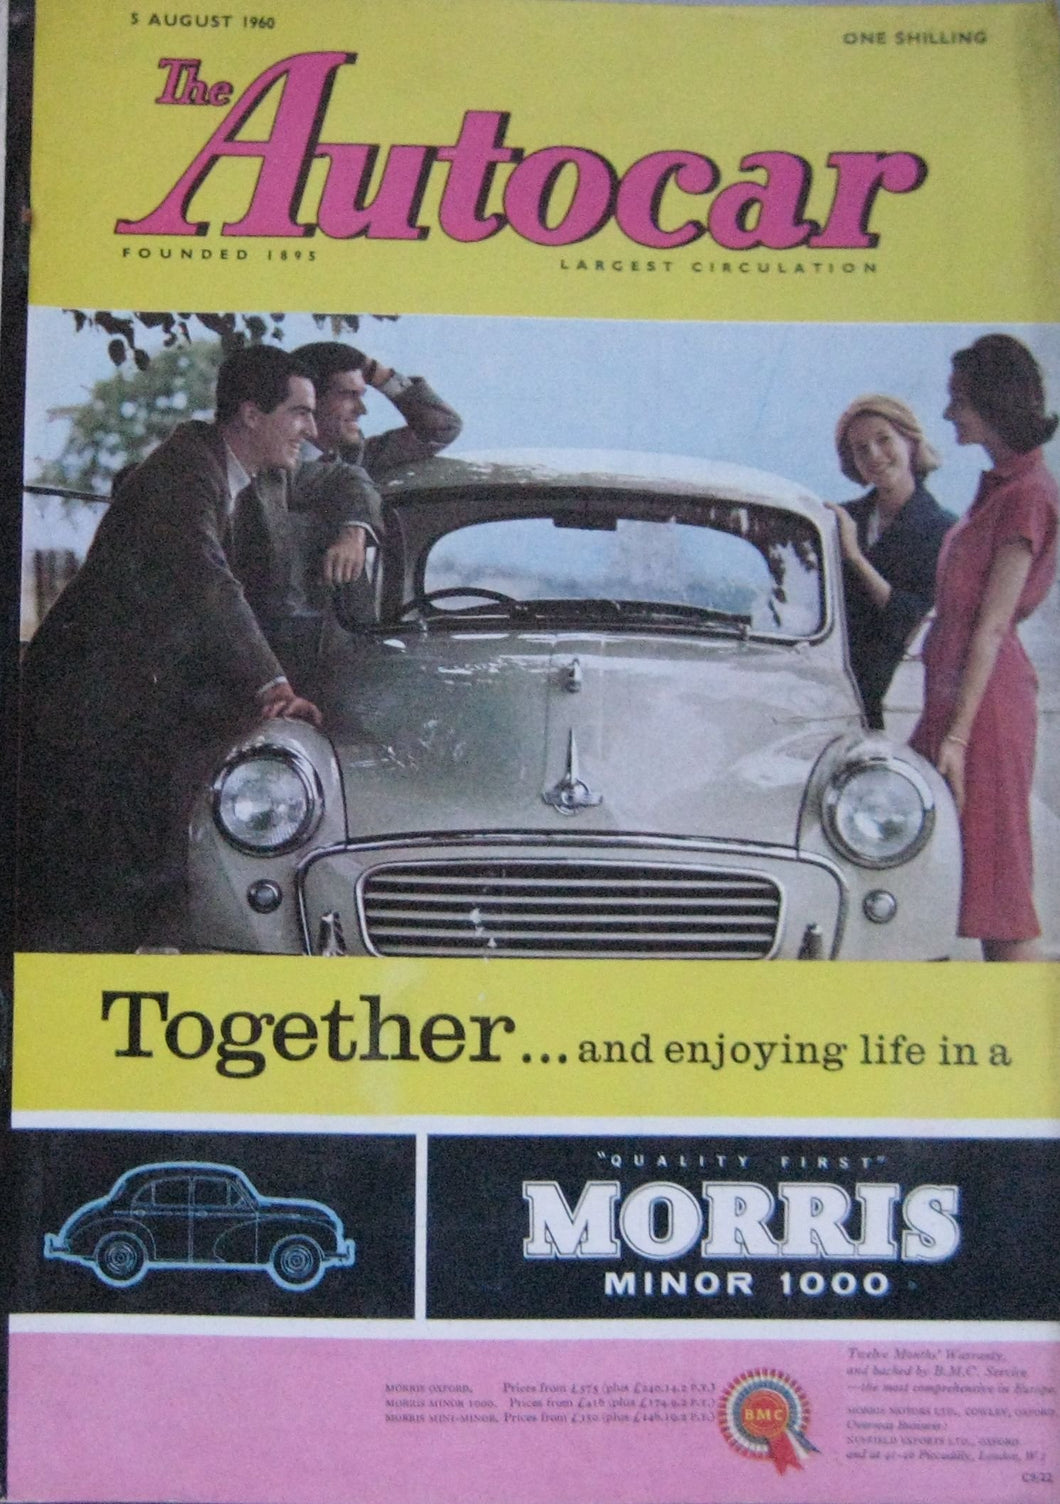 Autocar magazine 5/8/1960 featuring Renault Floride cabriolet road test